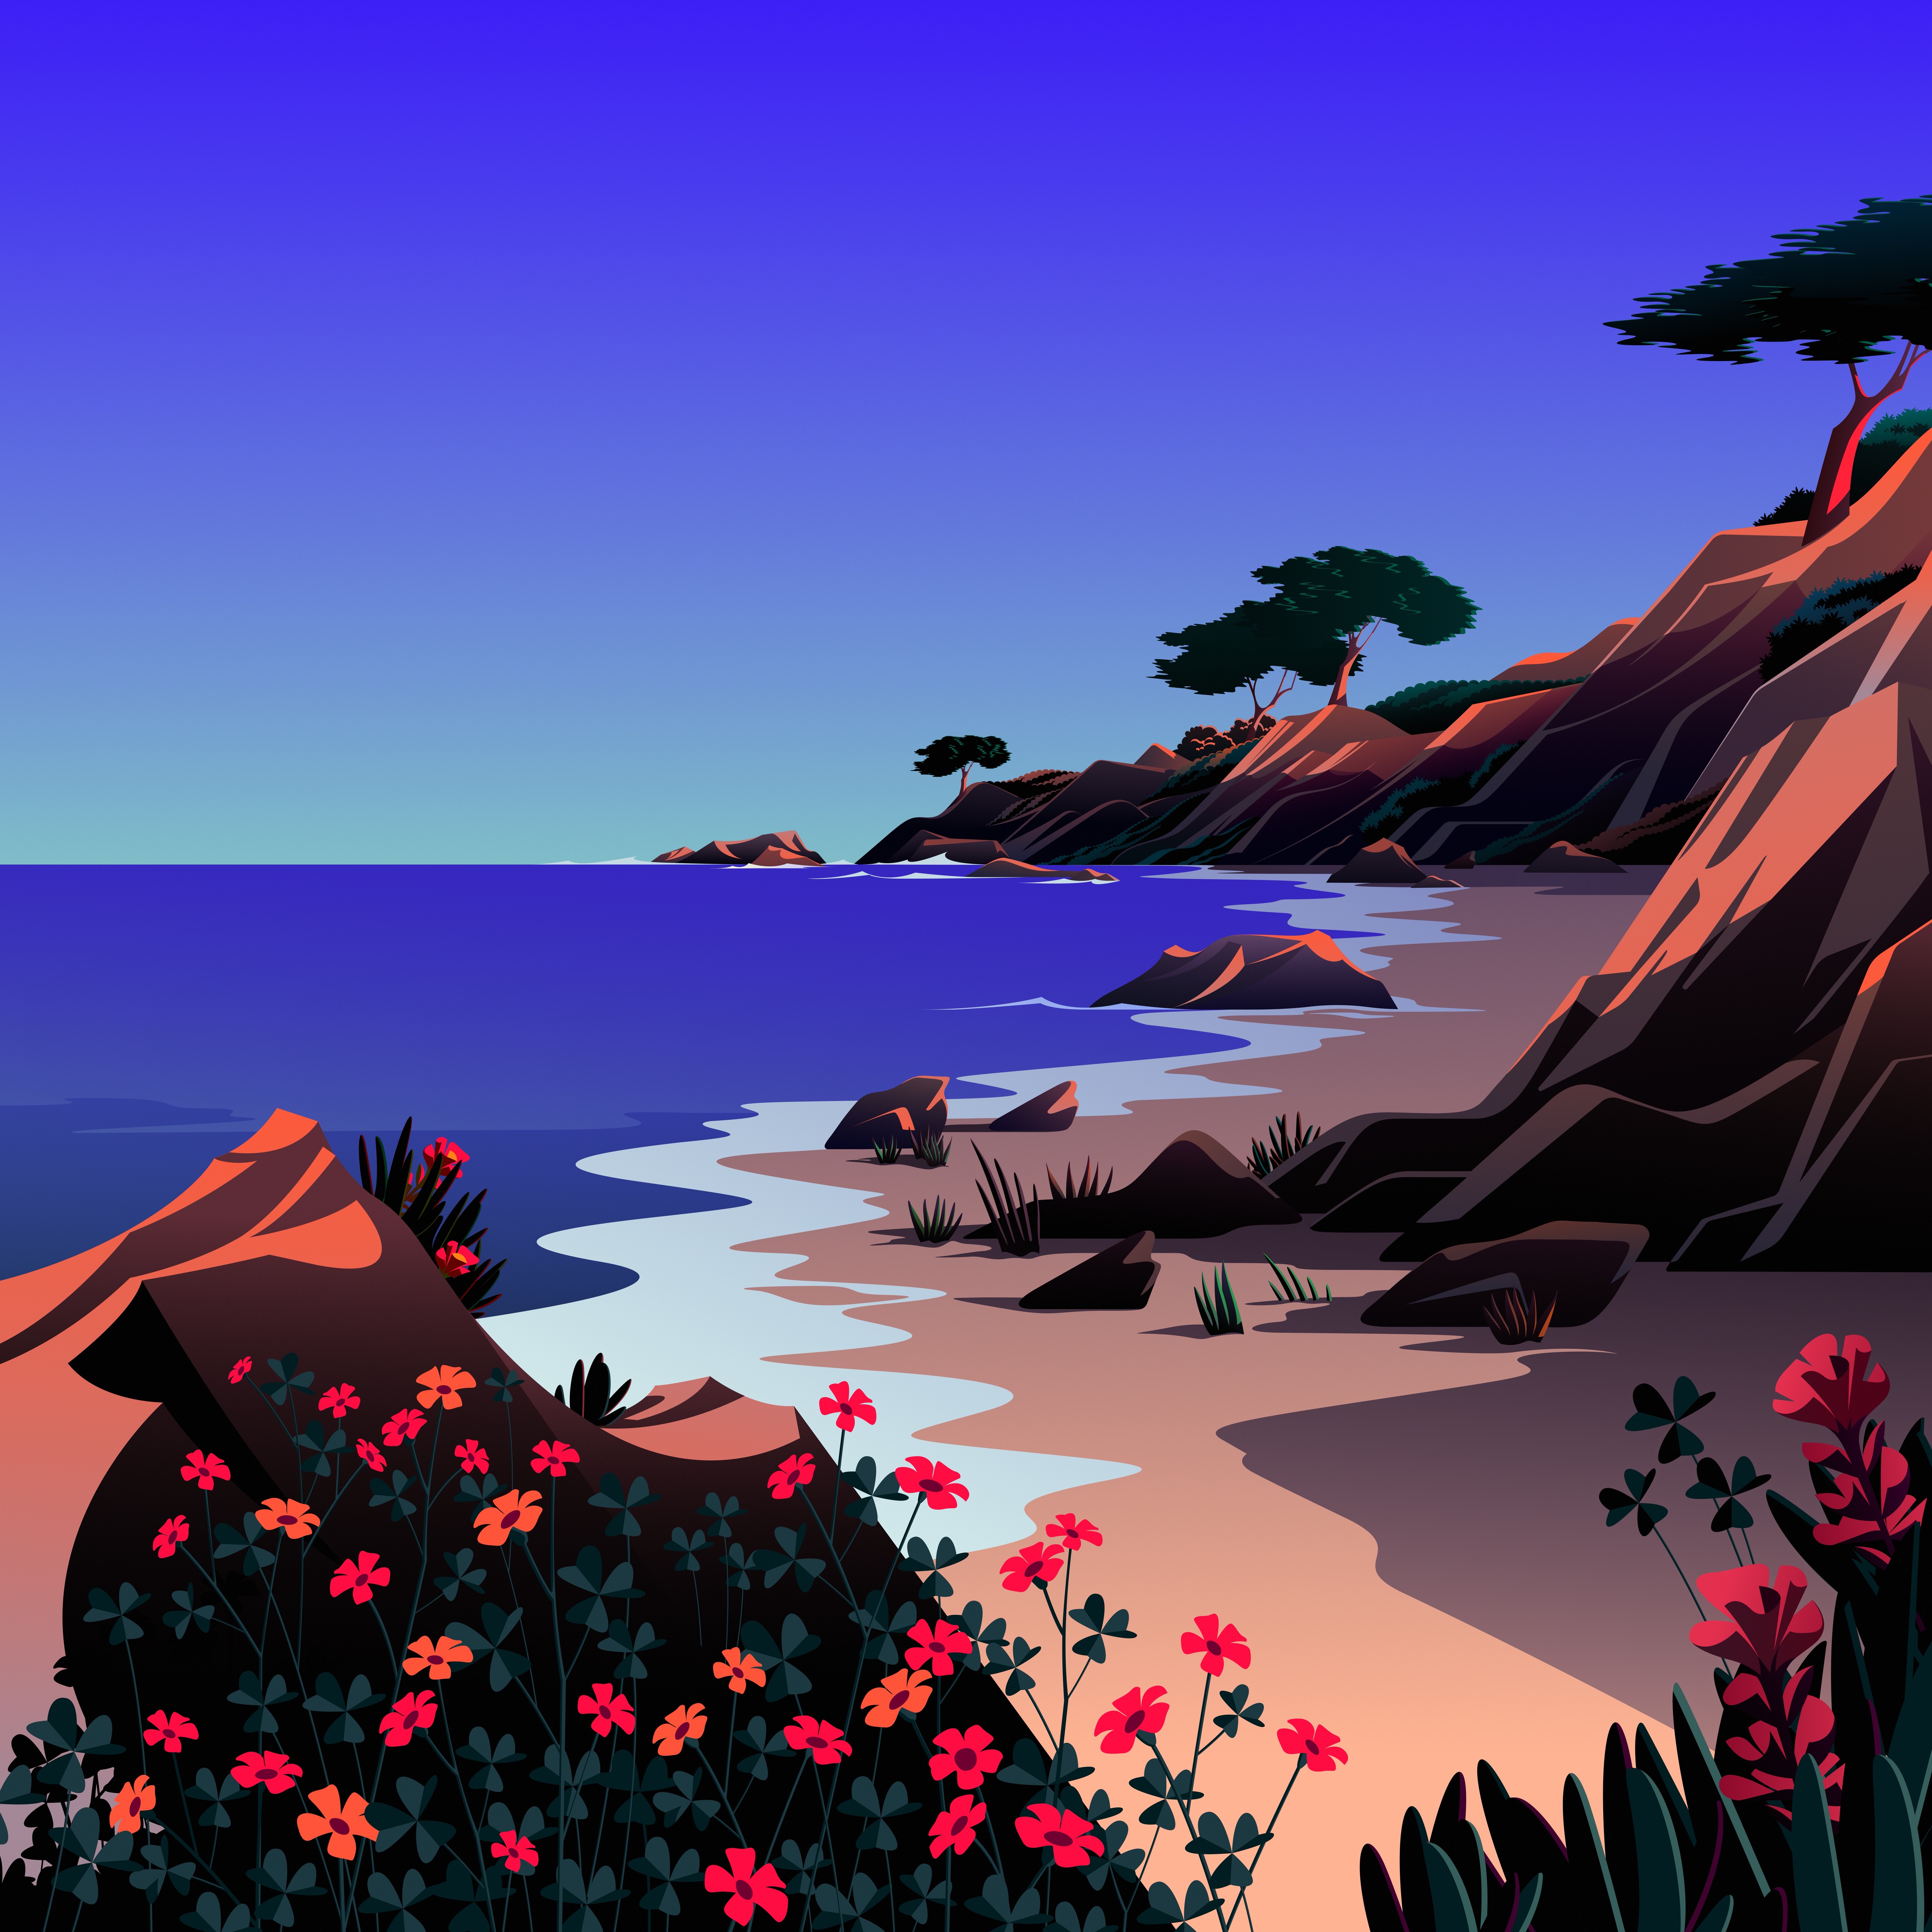 General 6016x6016 Big Sur digital art beach flowers plants outdoors Linux macOS